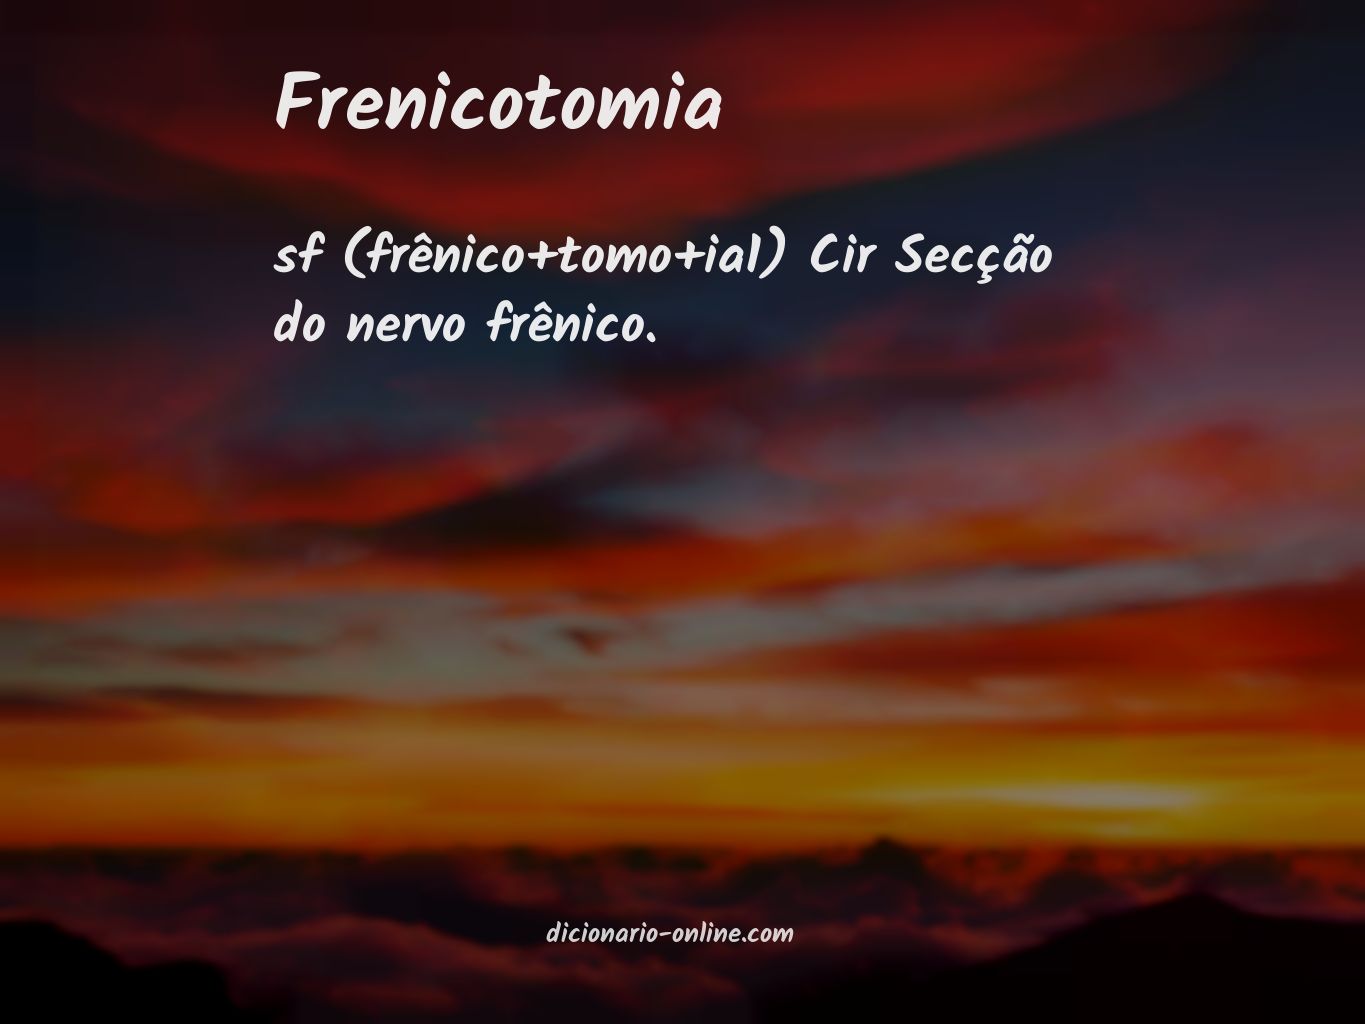 Significado de frenicotomia